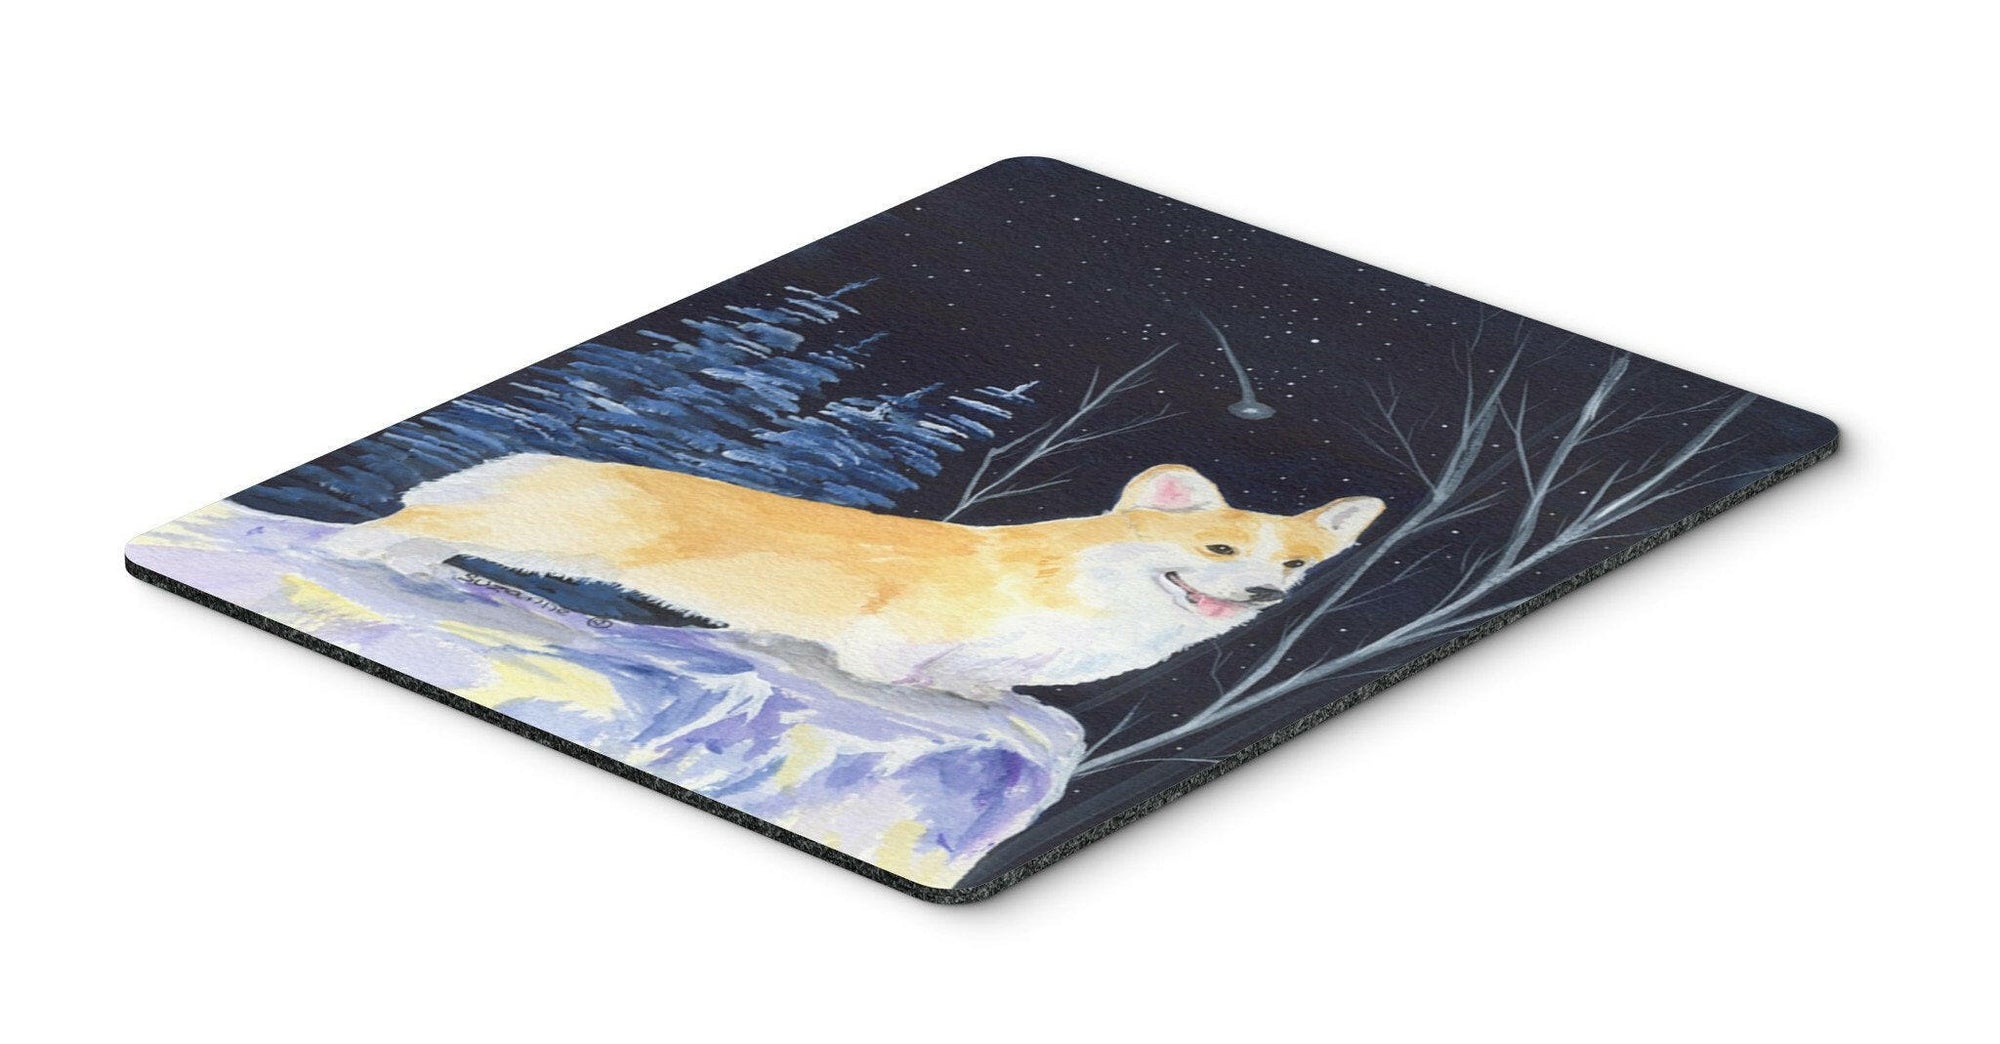 Starry Night Corgi Mouse Pad / Hot Pad / Trivet by Caroline's Treasures